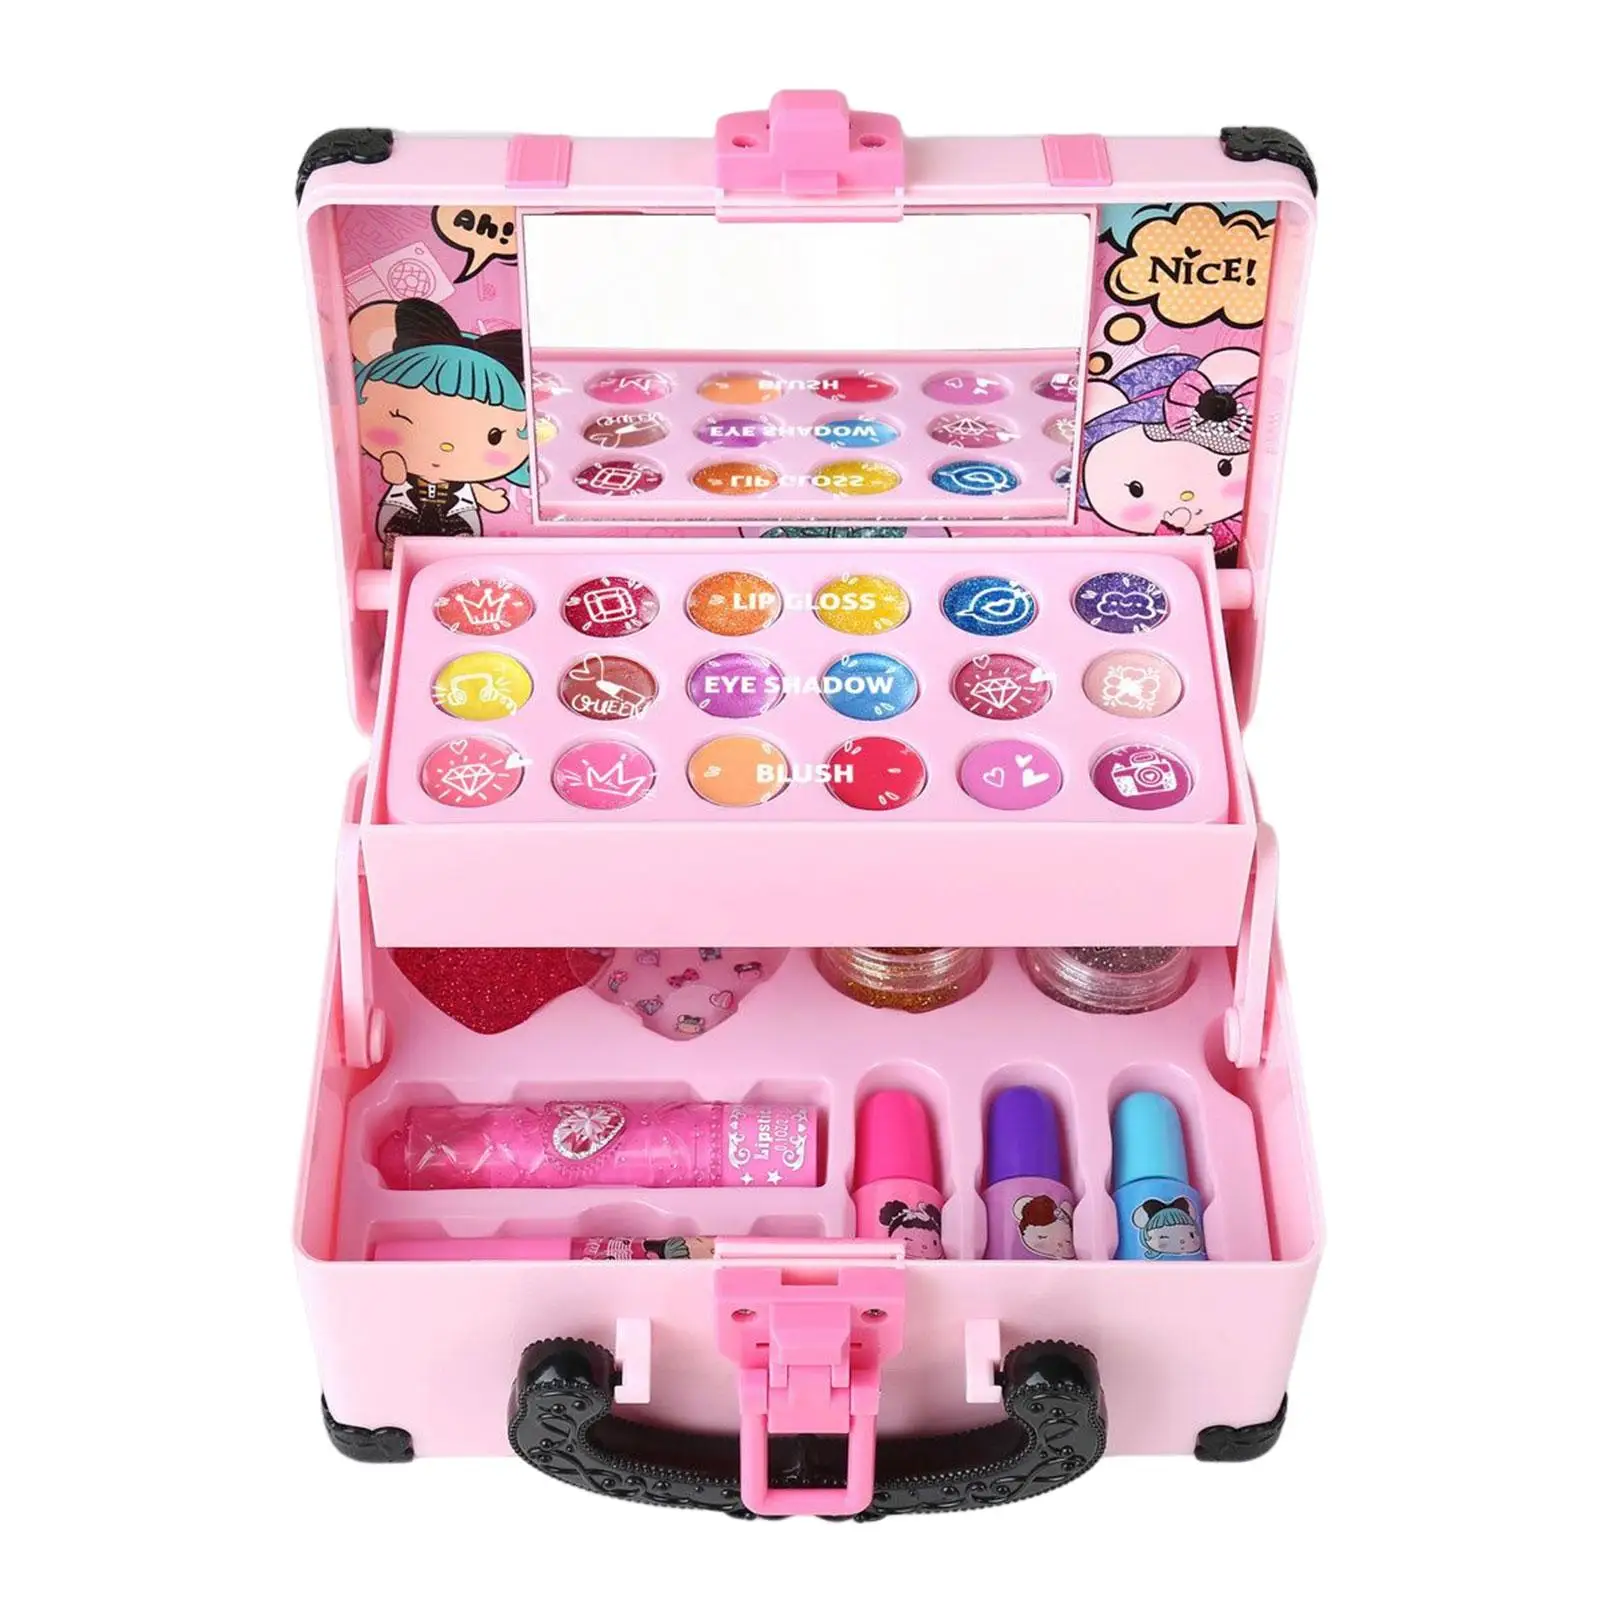 Cosmetics Makeup Toy Set Dresser Toy Role Playing Toy Makeup Vanity Toy Playset Pretend Makeup Set Kids Makeup Set for Kids